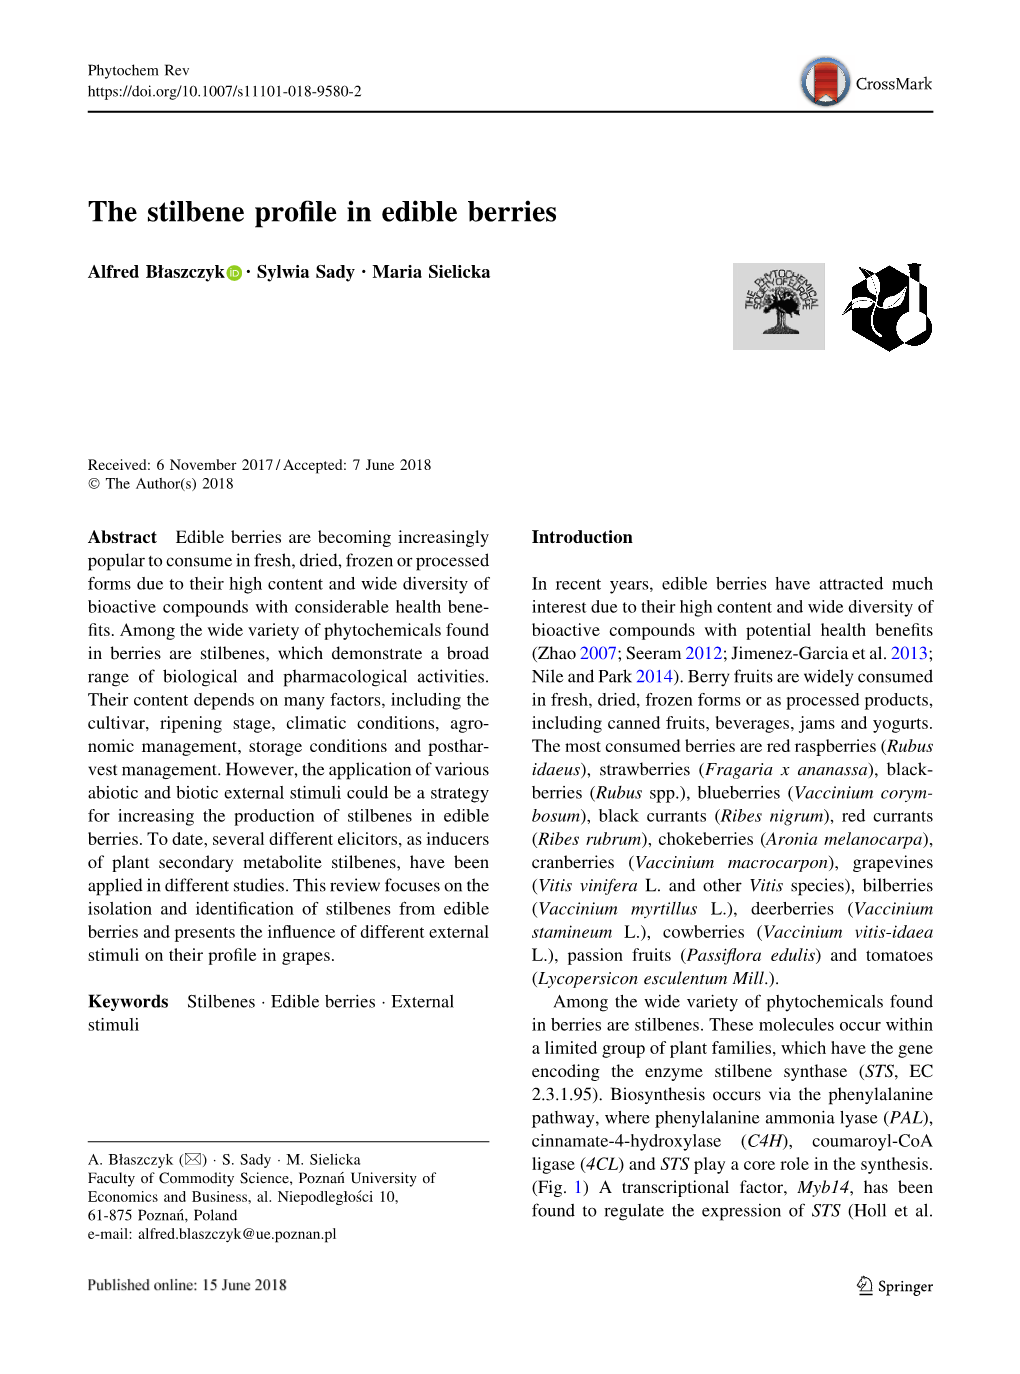 The Stilbene Profile in Edible Berries